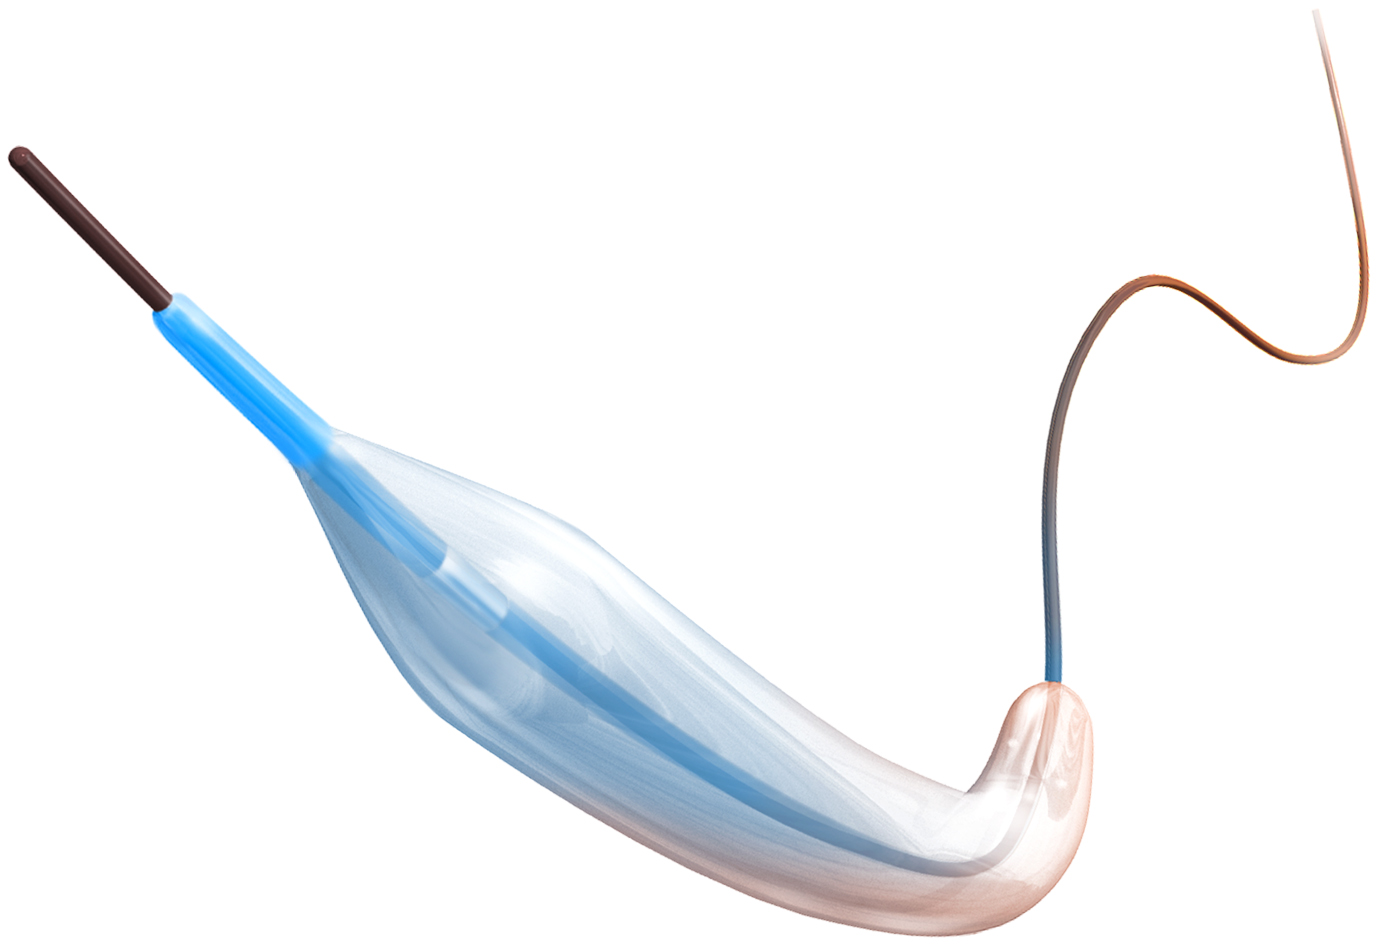 Global Micro Balloon Catheter Industry